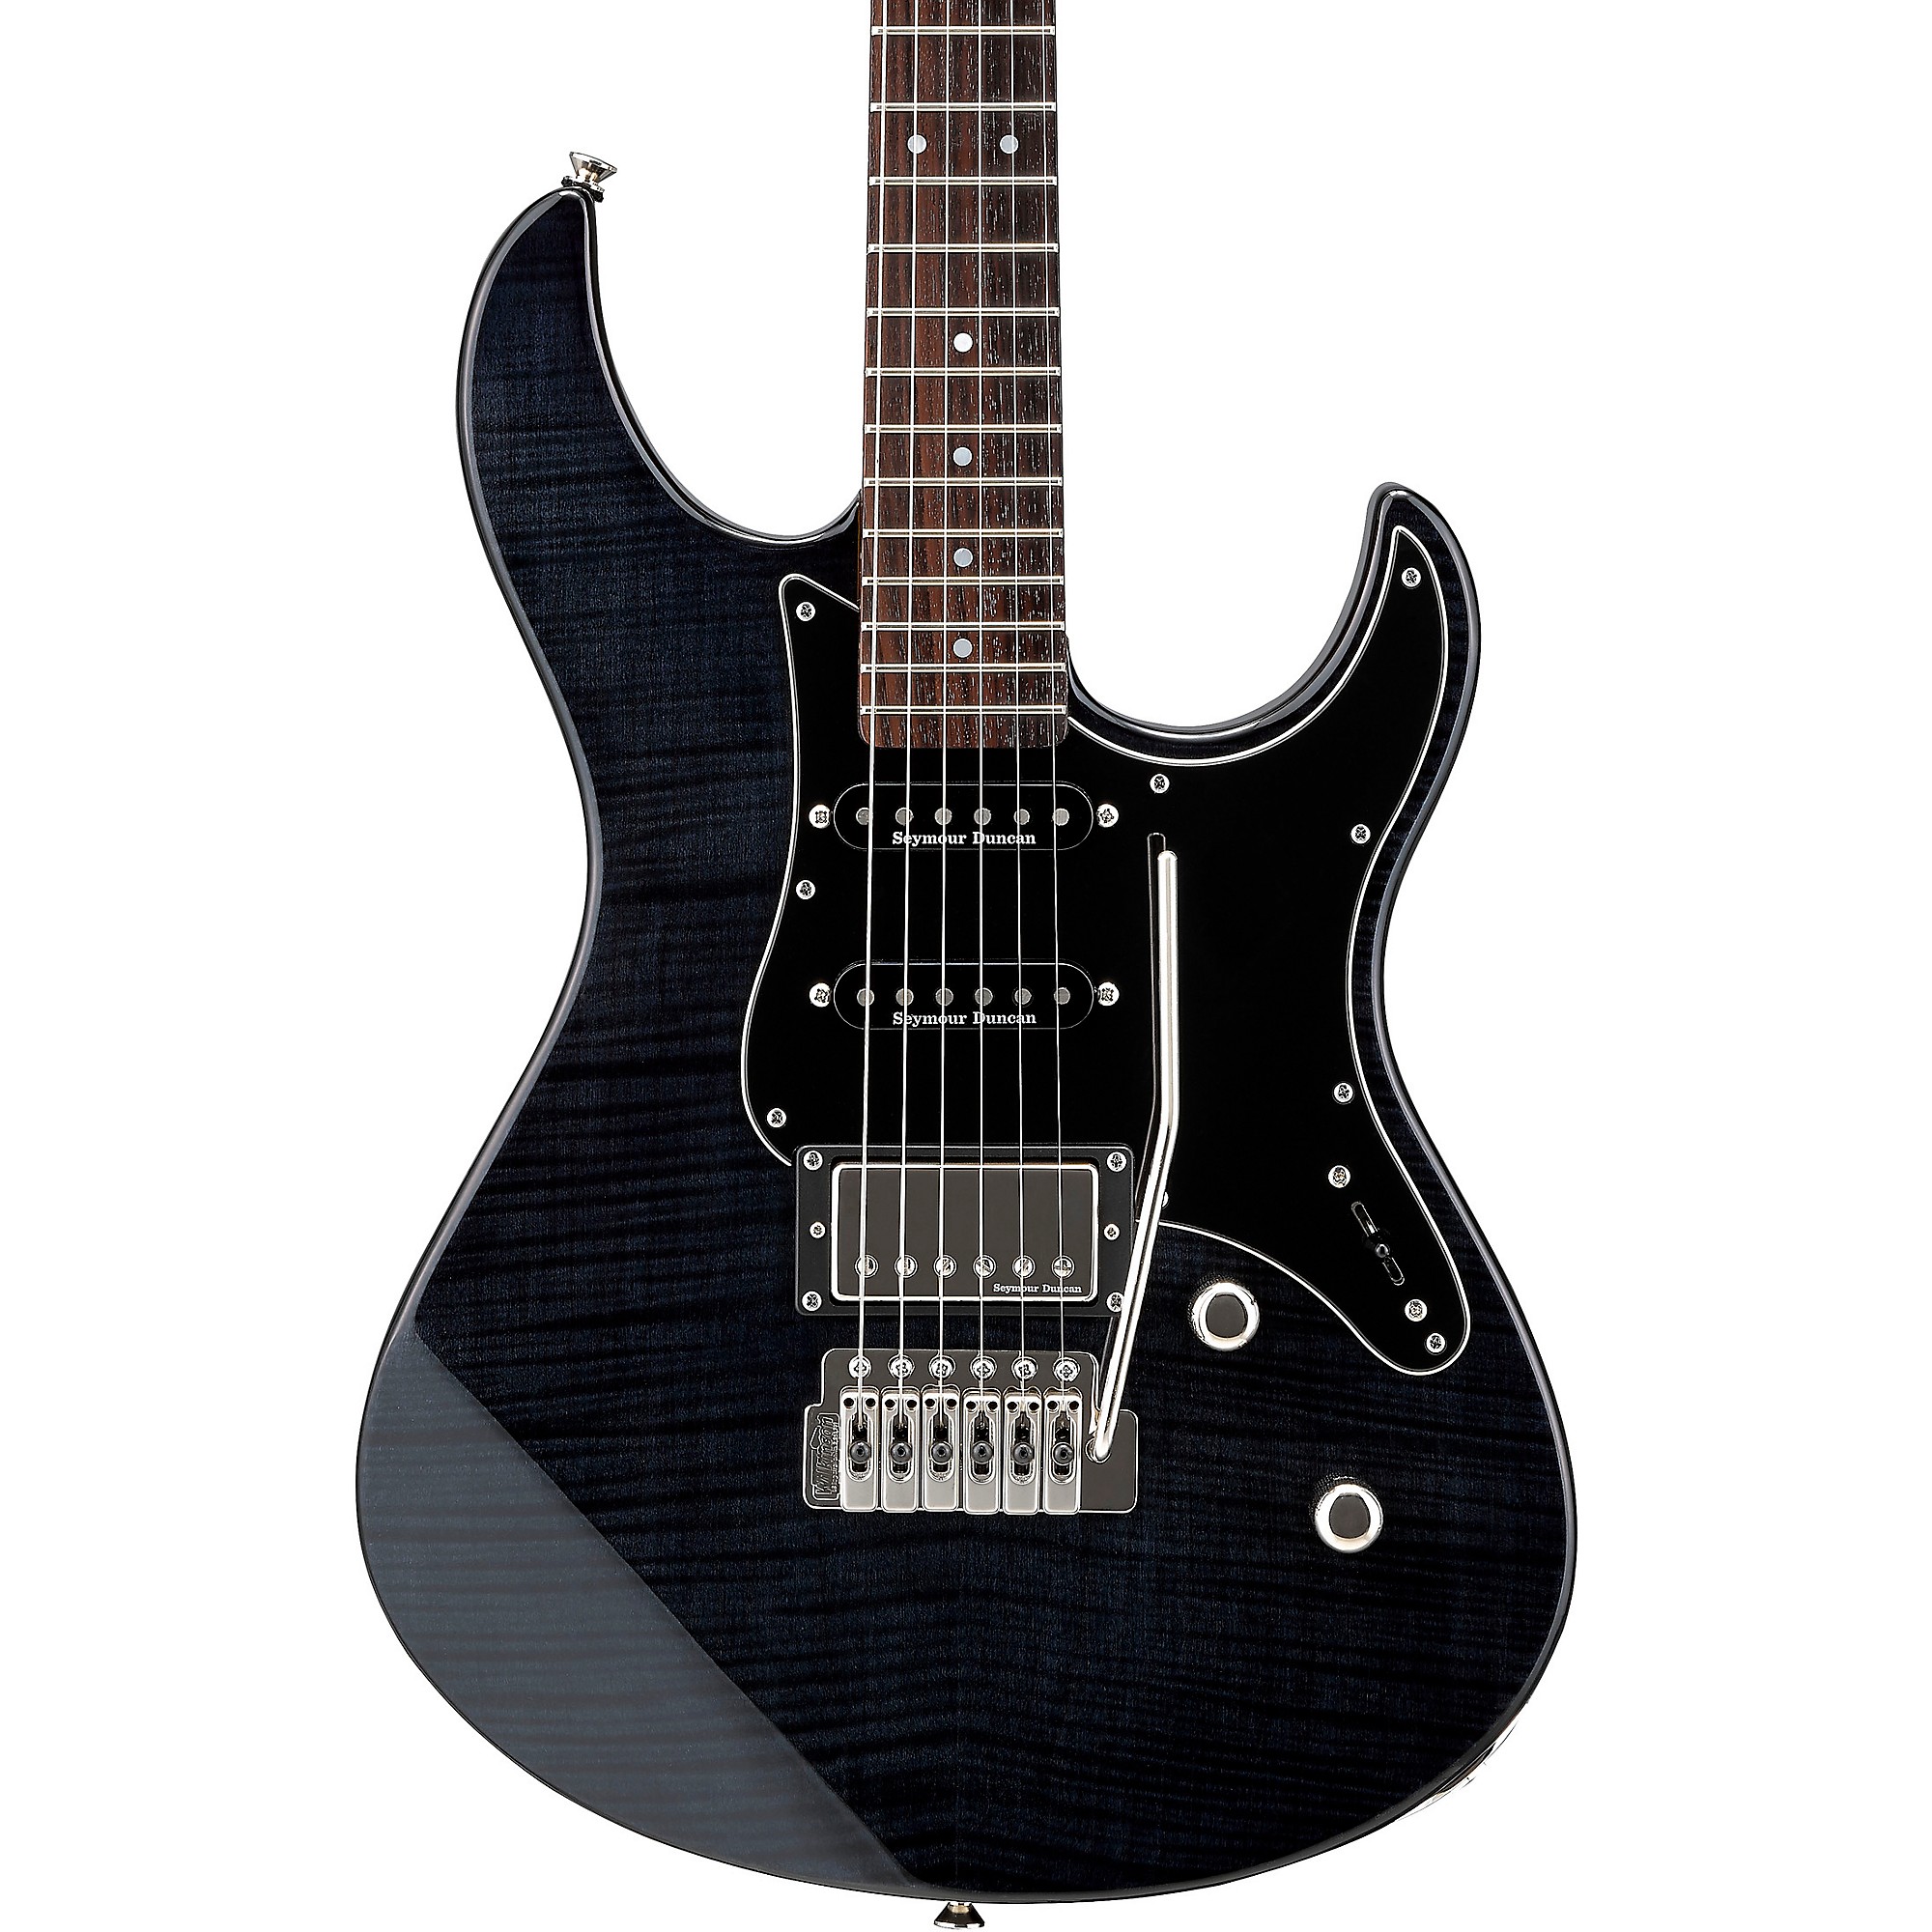 Yamaha Pacifica 612VII Flame Maple Electric Guitar Transparent Black